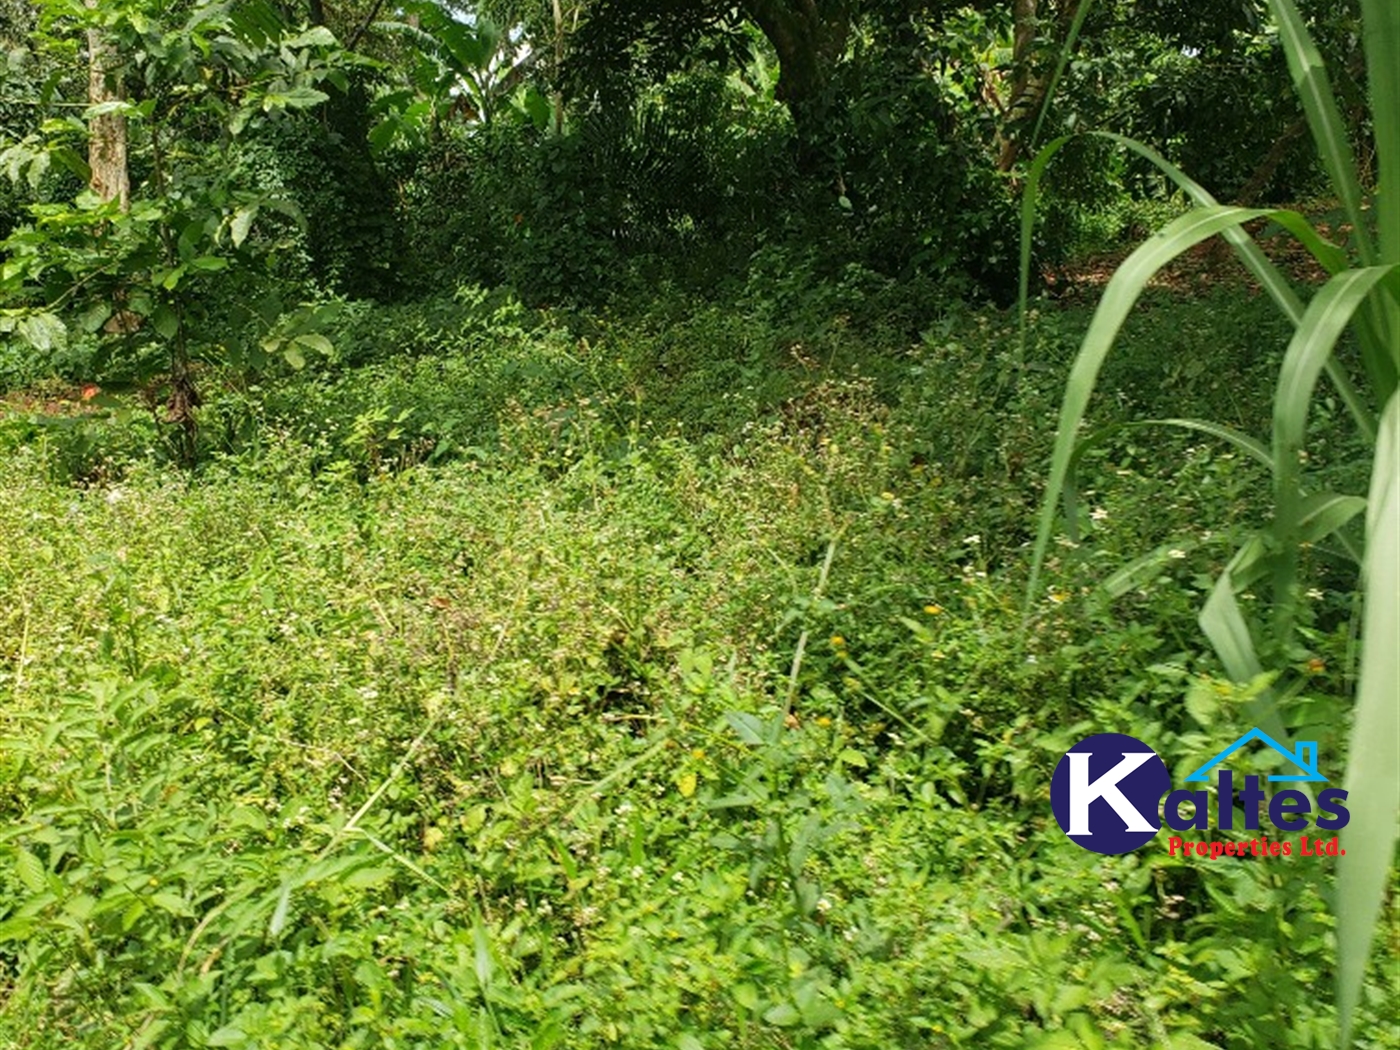 Agricultural Land for sale in Kabugoga Buyikwe